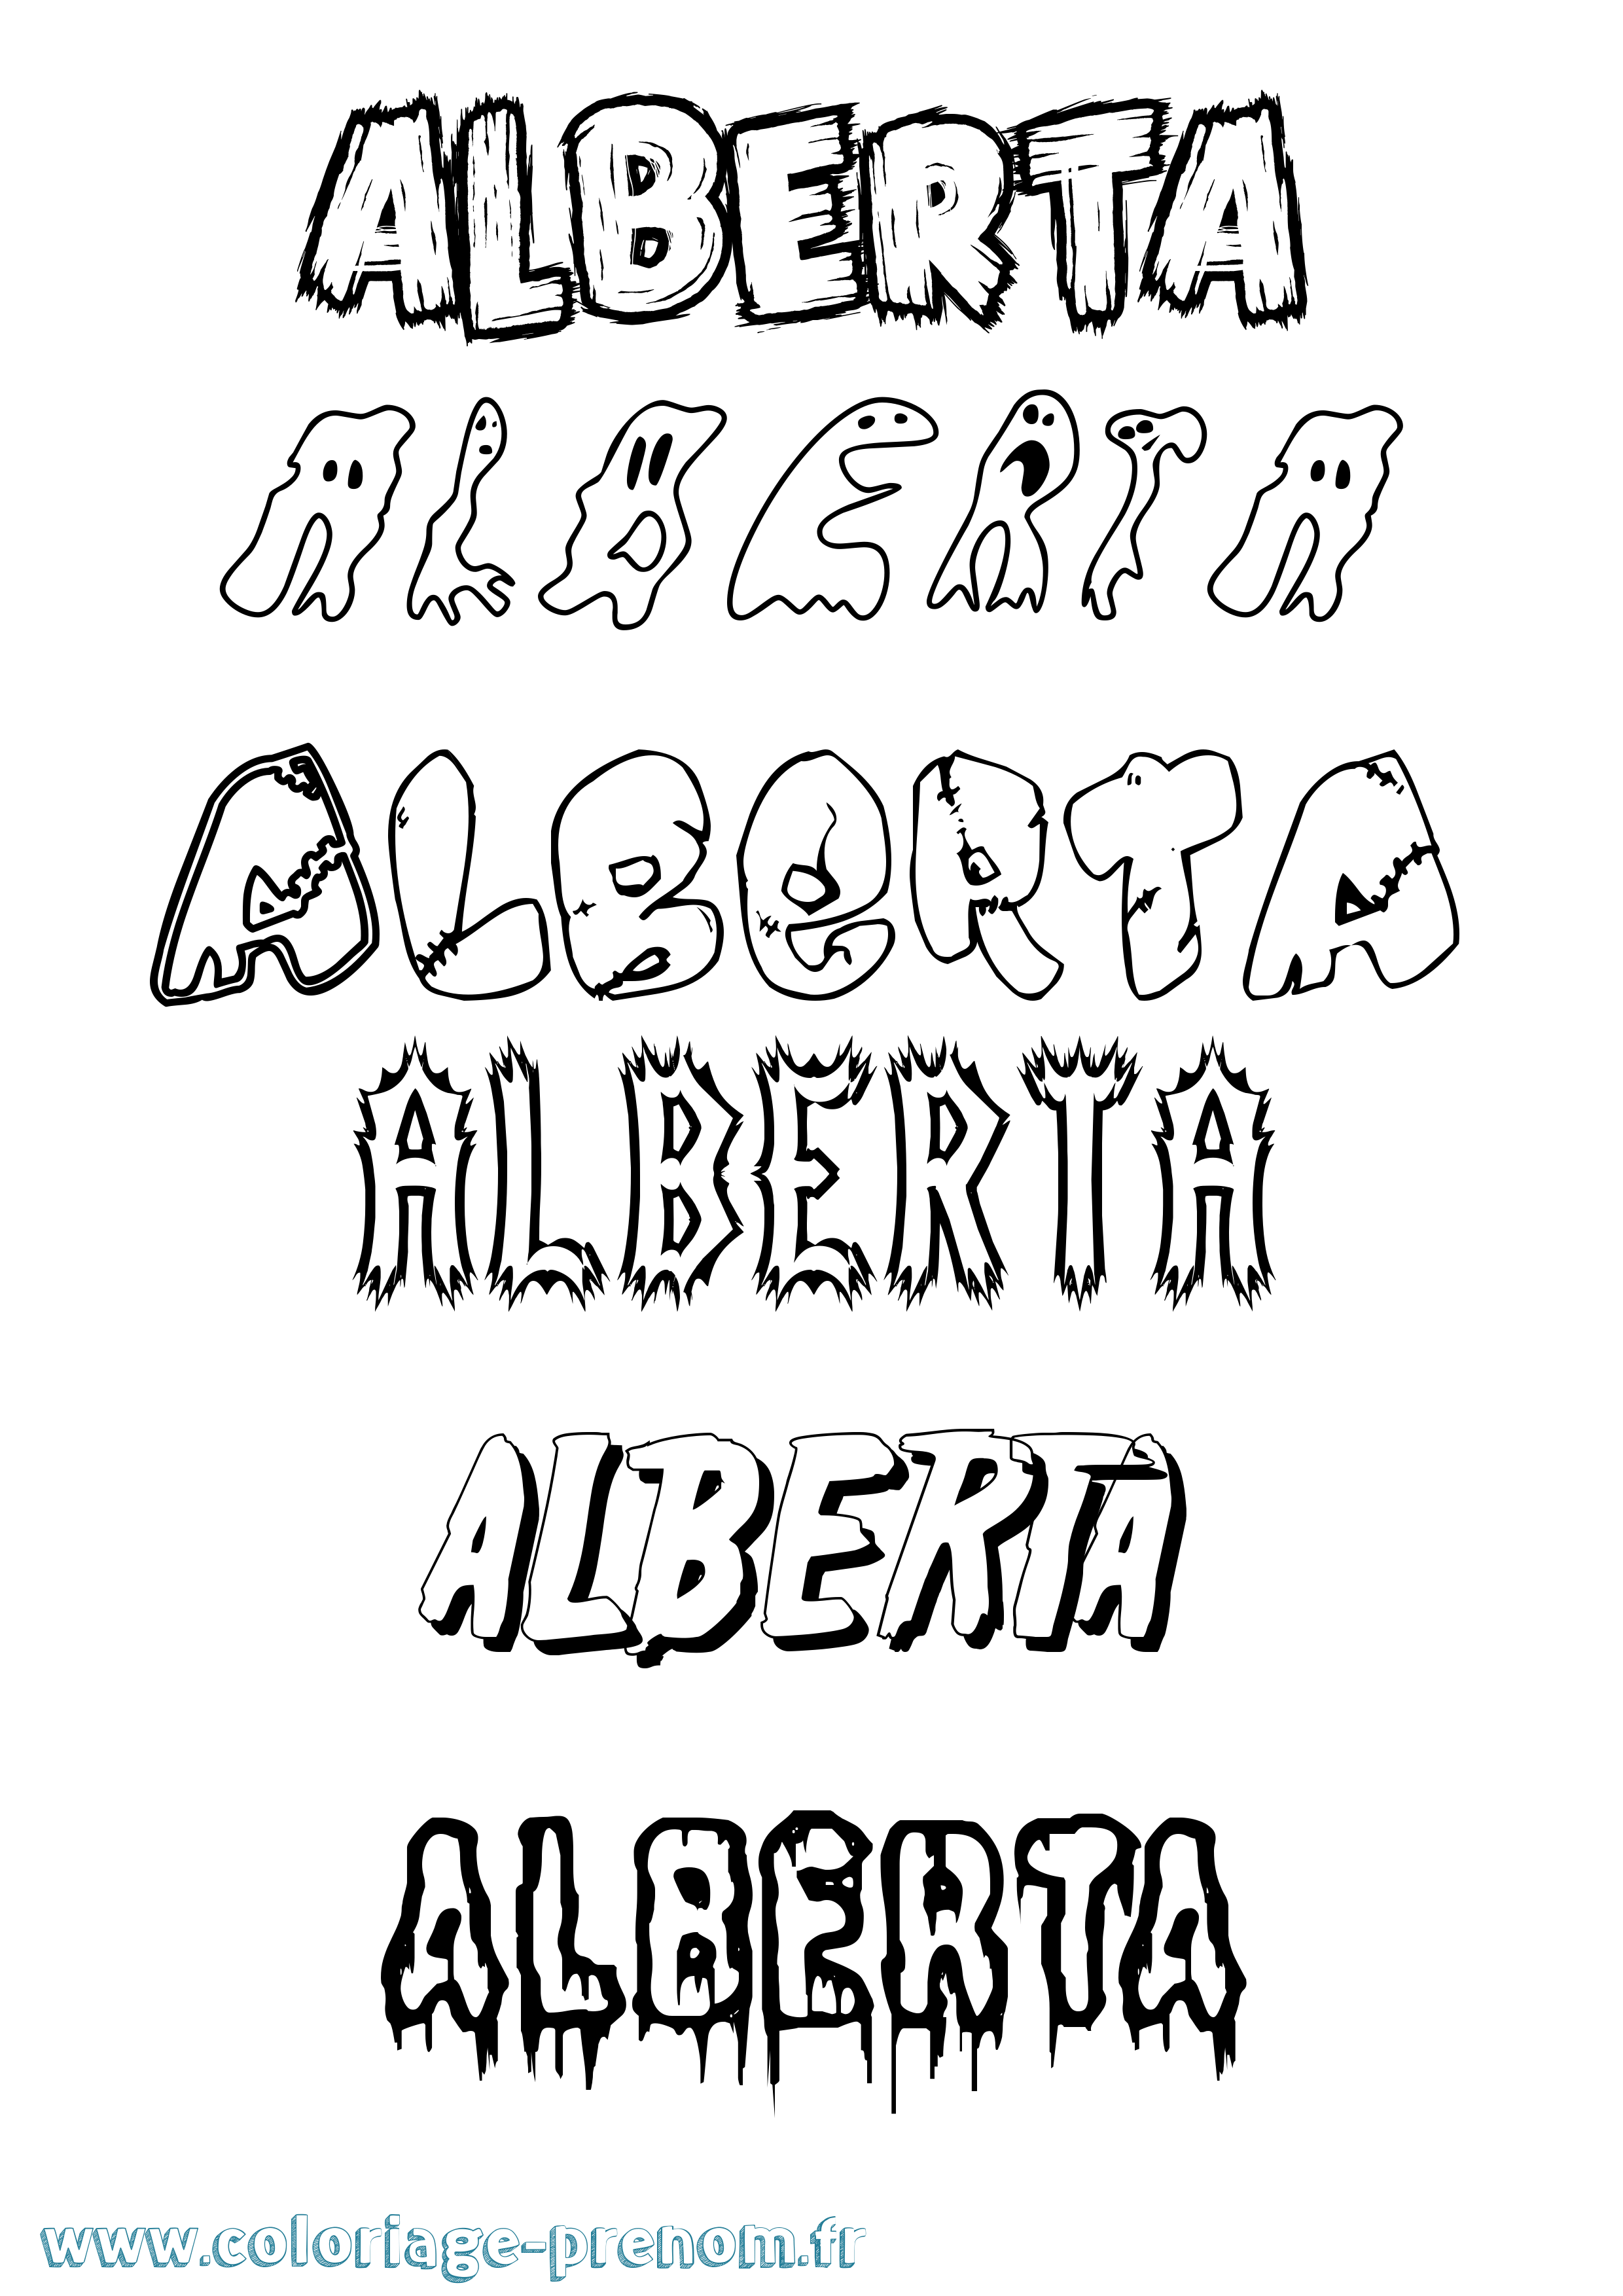 Coloriage prénom Alberta Frisson